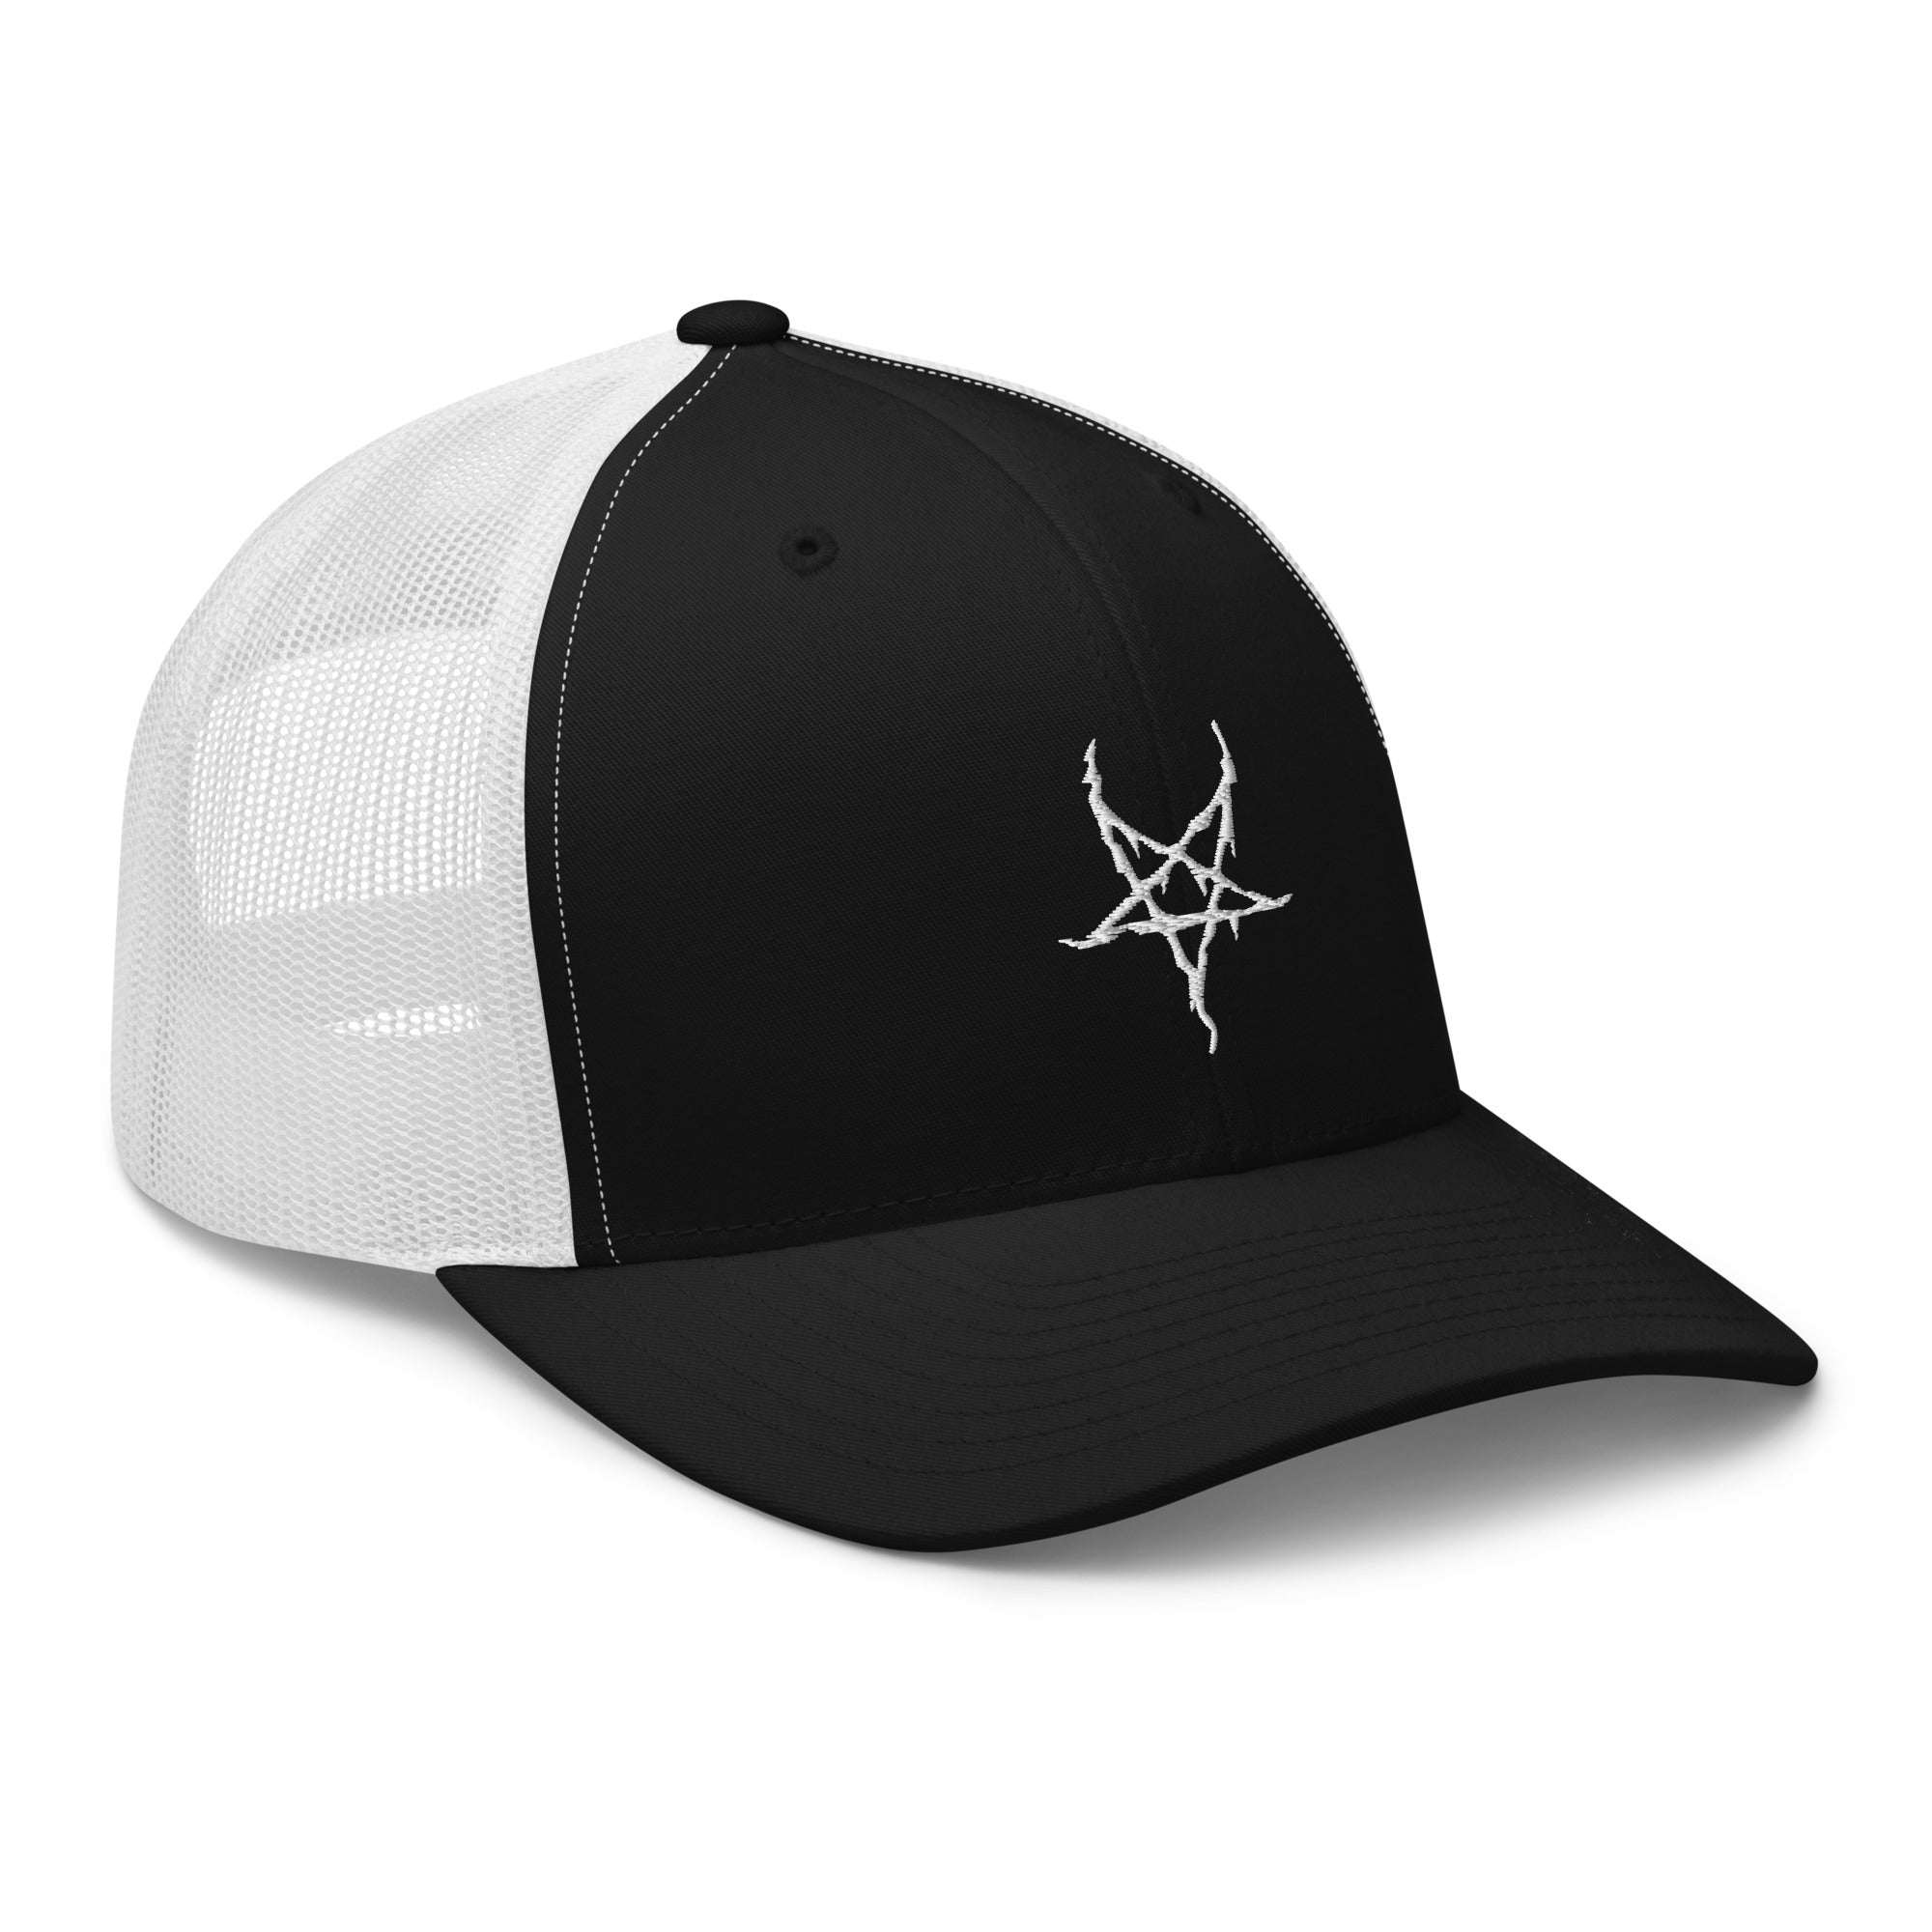 White Inverted Pentagram Black Metal Style Embroidered Trucker Cap Snapback Hat